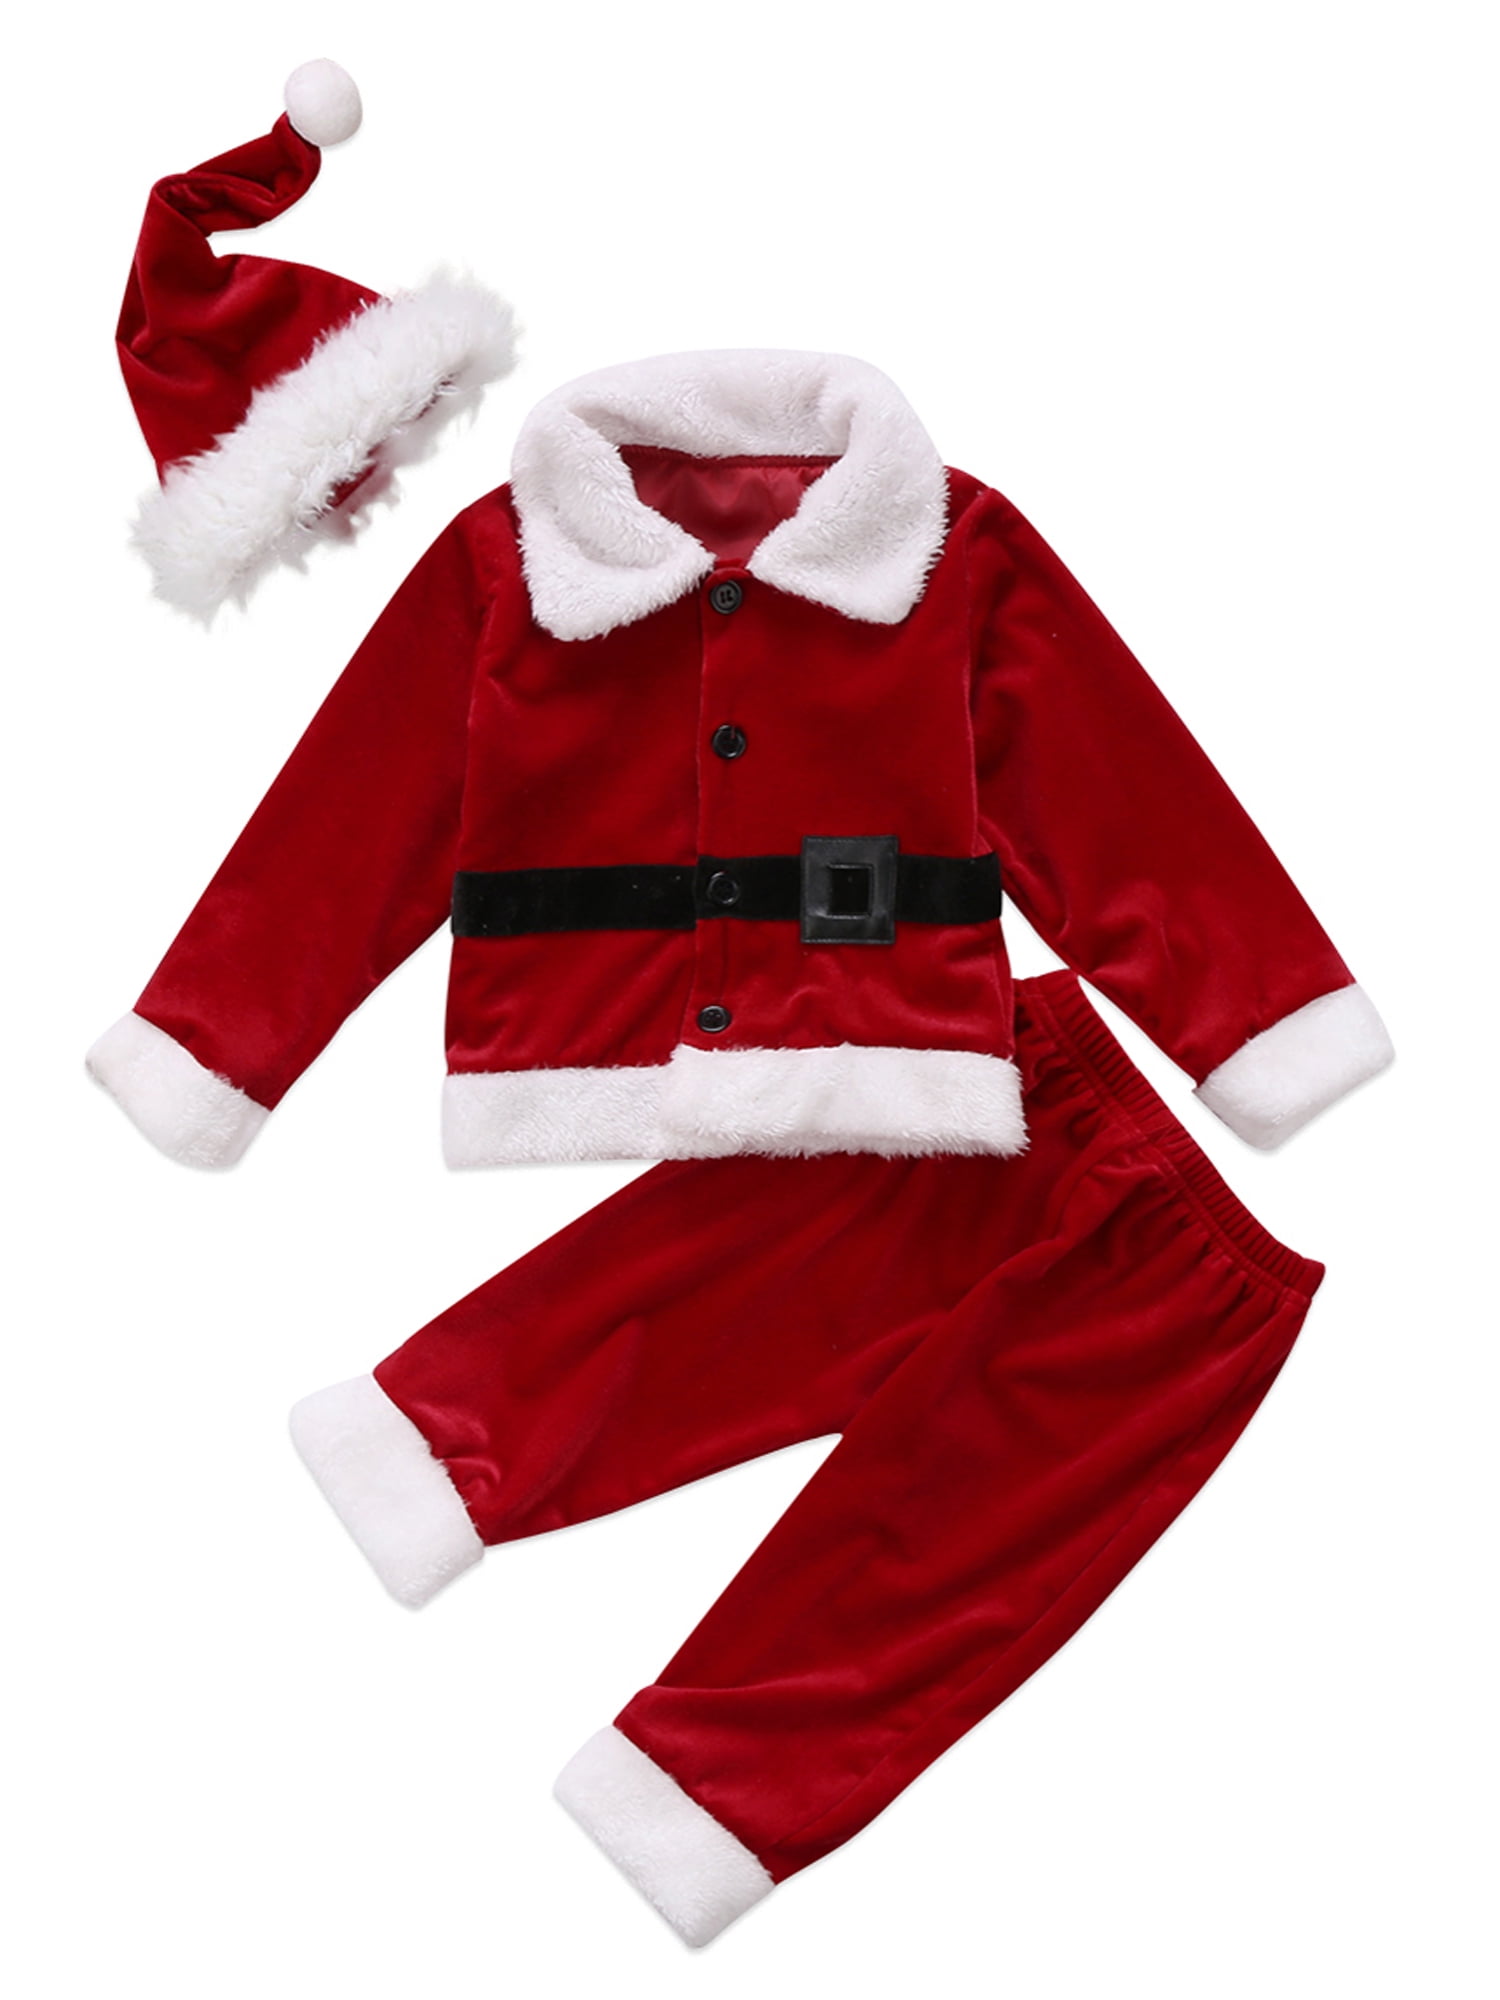 Toddler Santa Suit Cotton Costume Christmas Pajama Set Red 12M 18M Baby Boy Girl 